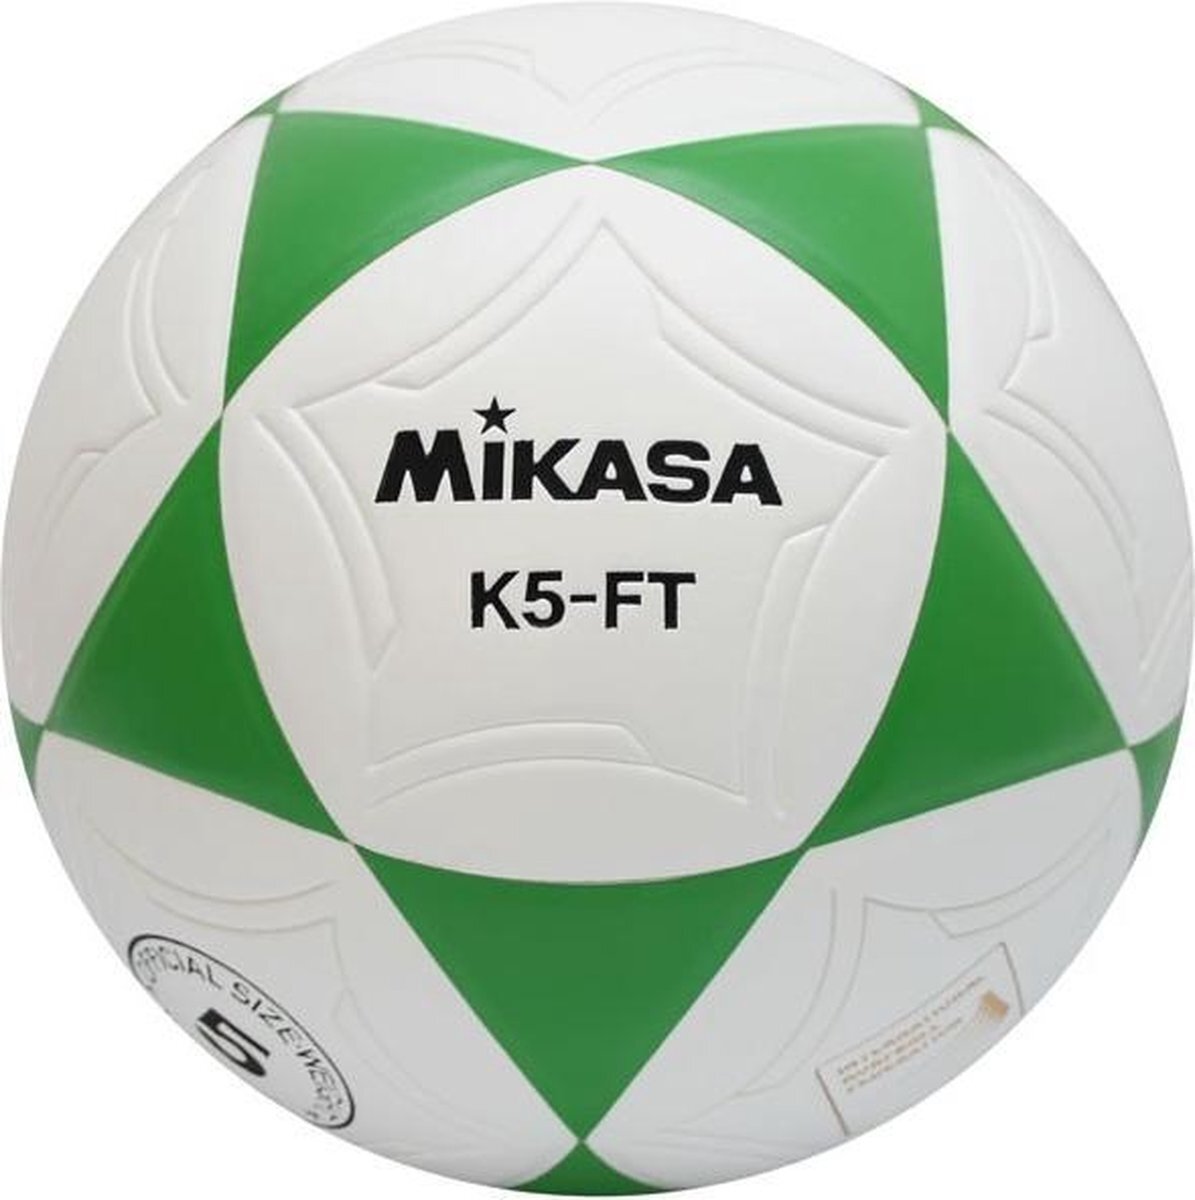 Mikasa K5-FT Korfbal - Korfballen - groen/wit - maat 5